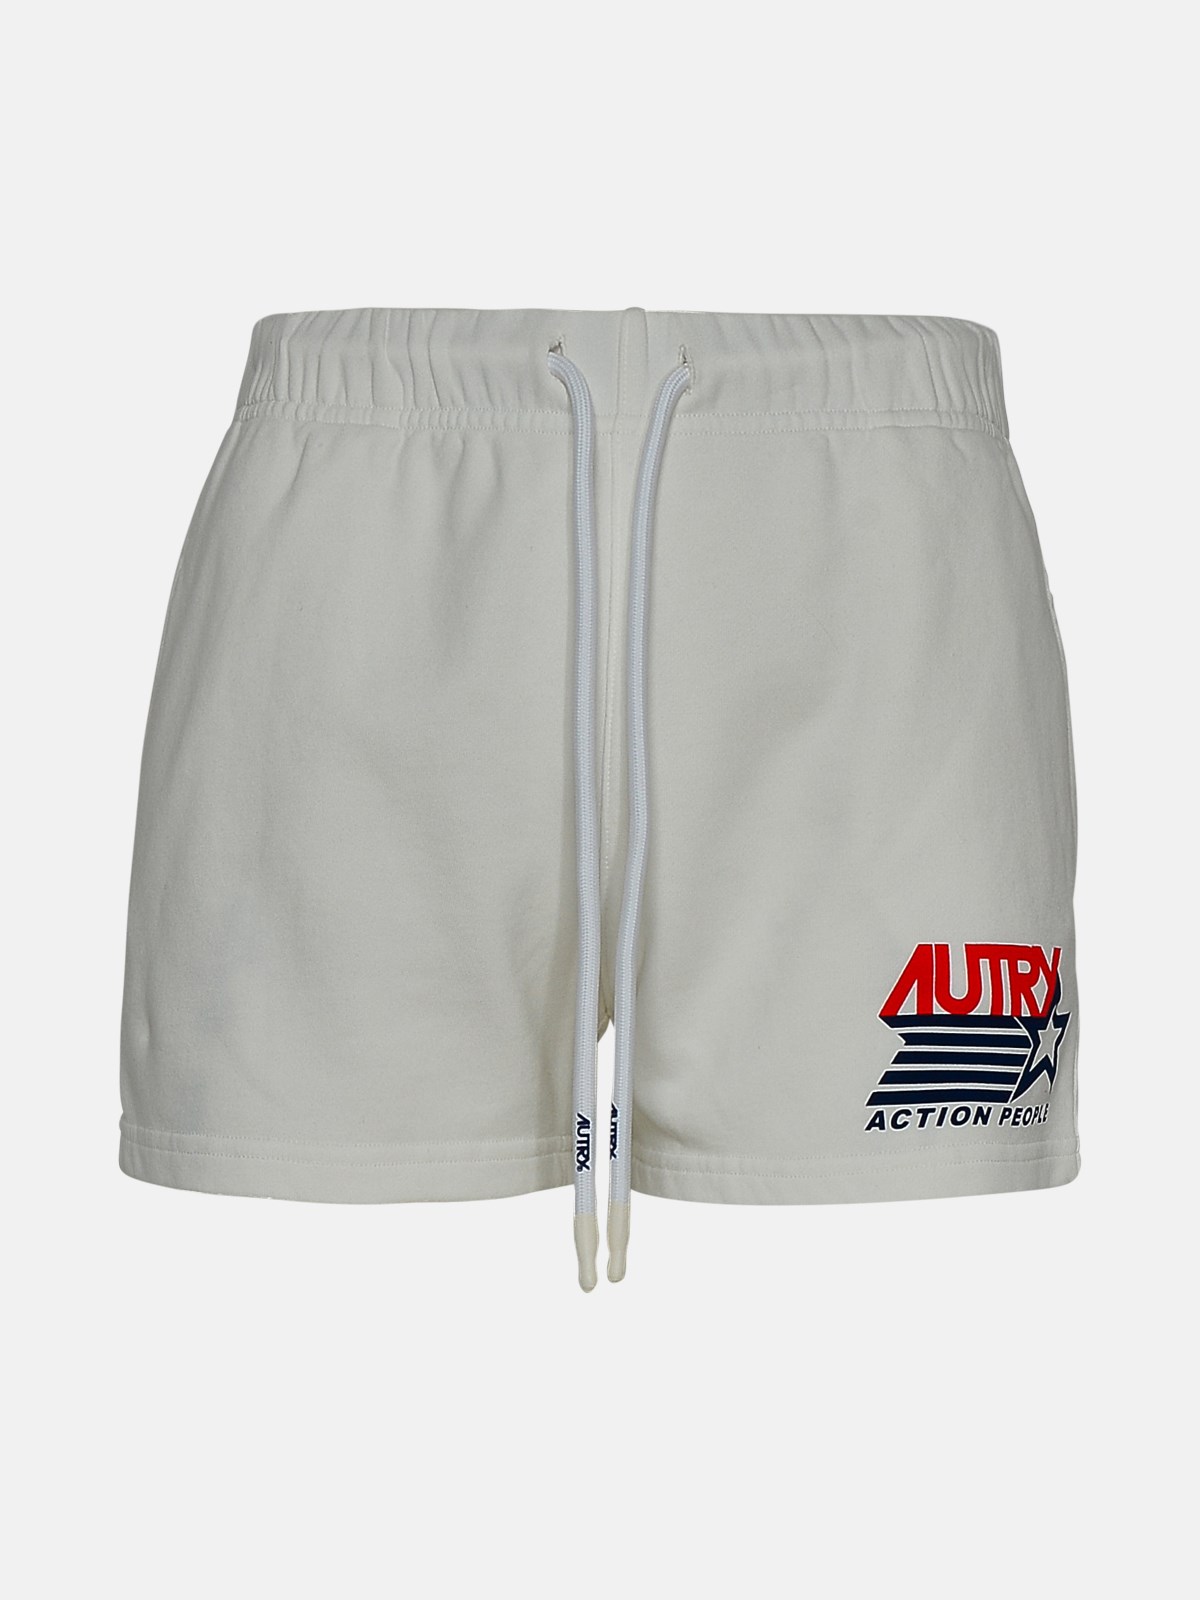 Autry Kids' White Cotton Shorts